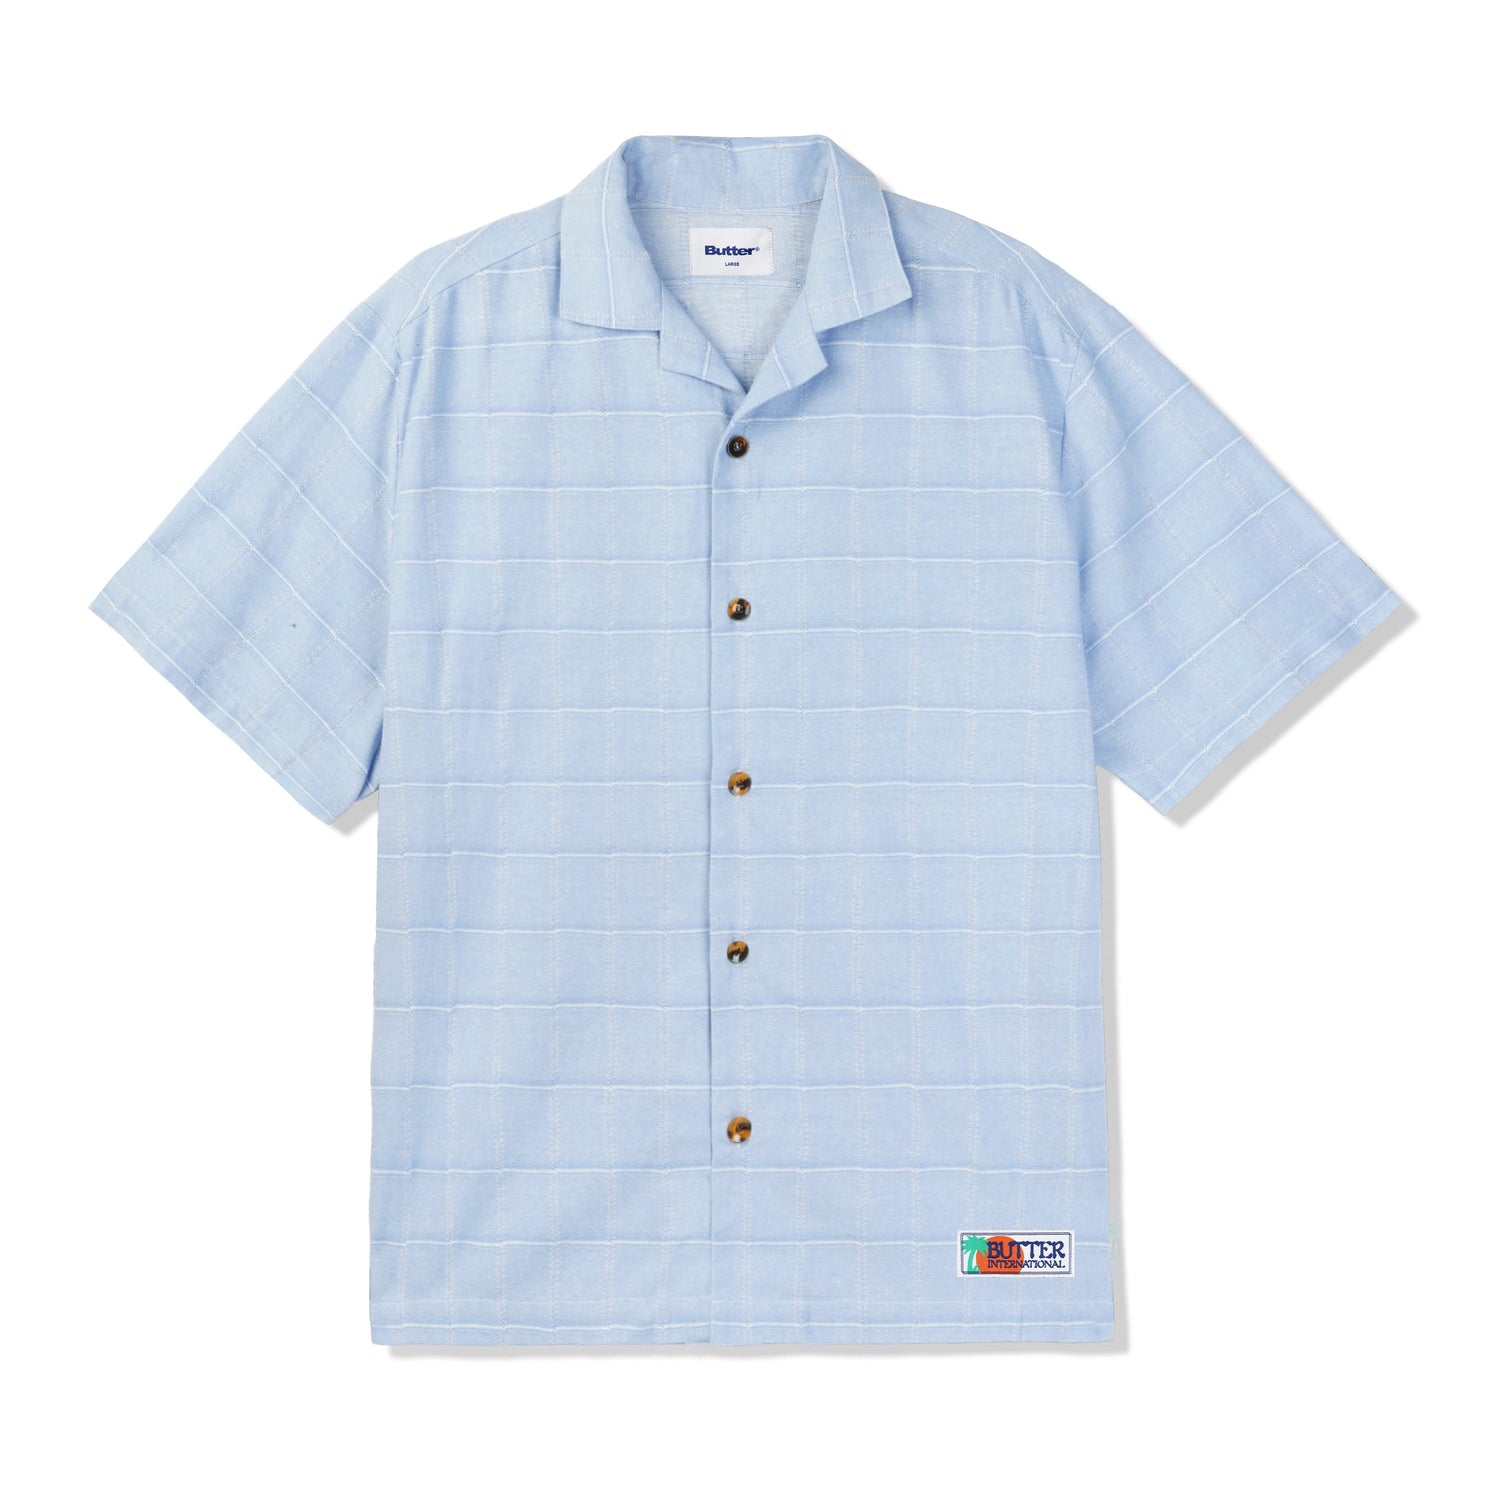 Pacific S/S Shirt, Sky Blue